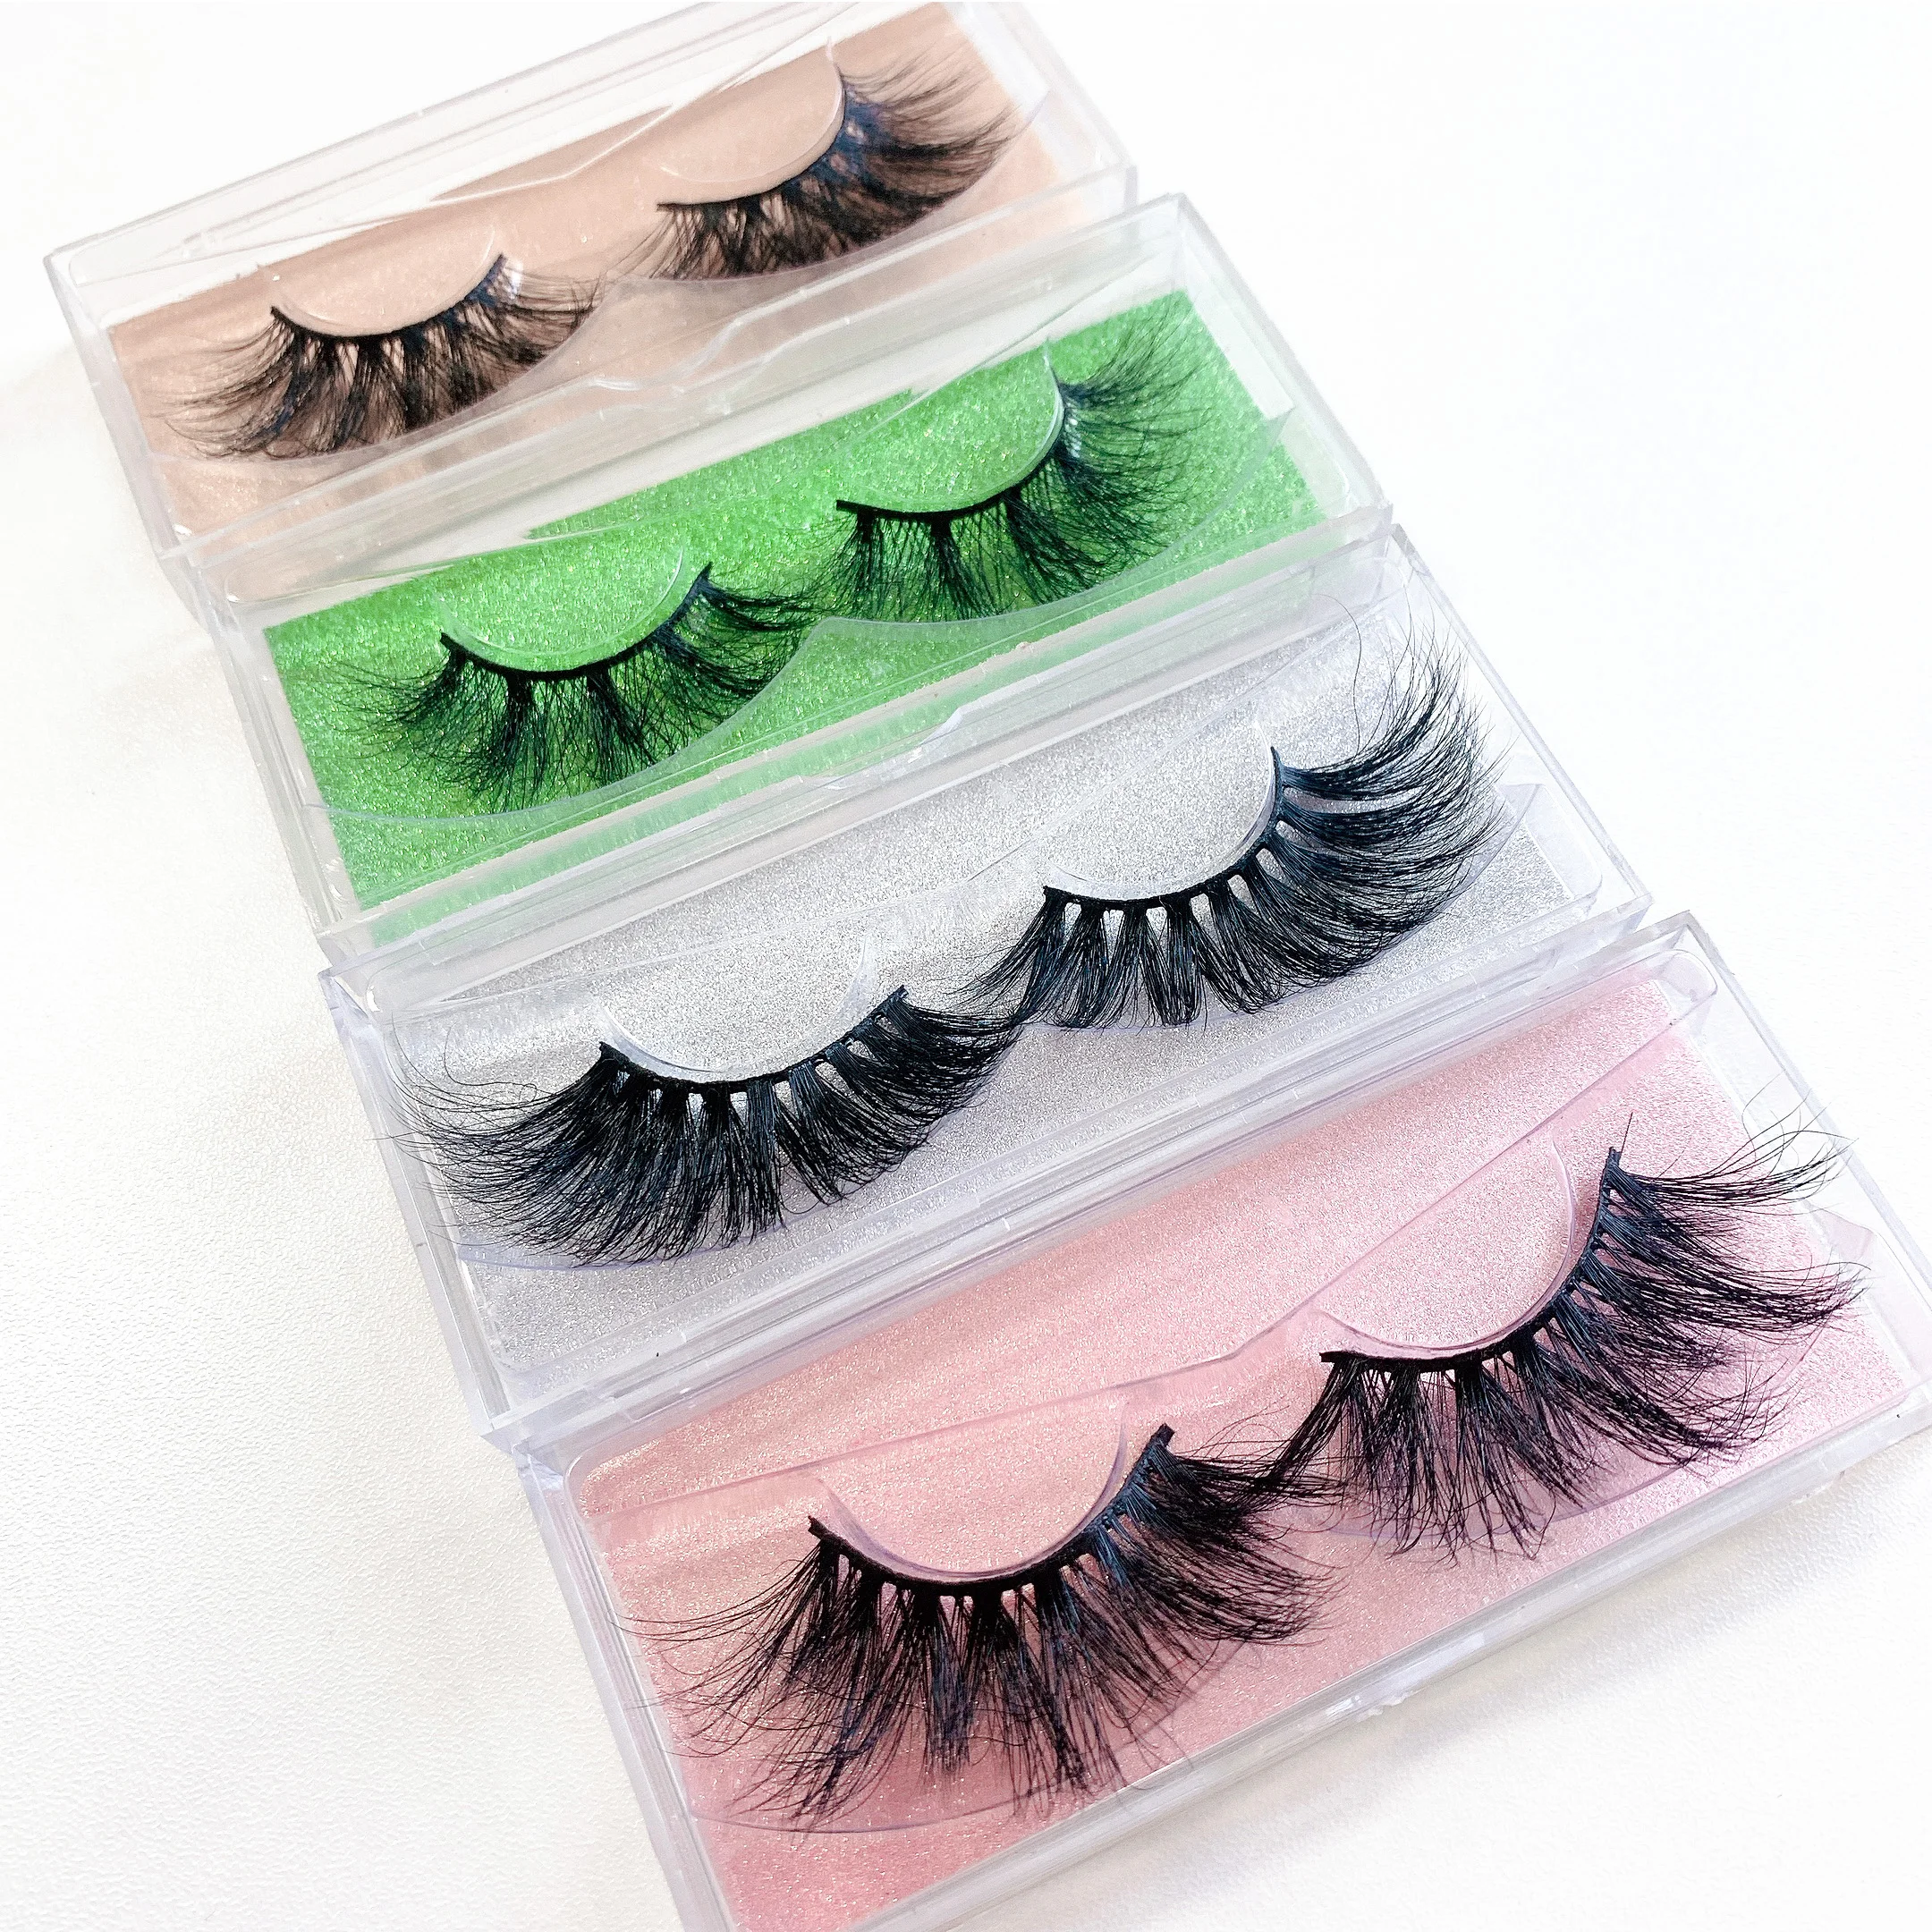 

Factory vendor Strip lashes cases private label eyelash vendor customized boxes18mm faux mink eyelashes, Black color